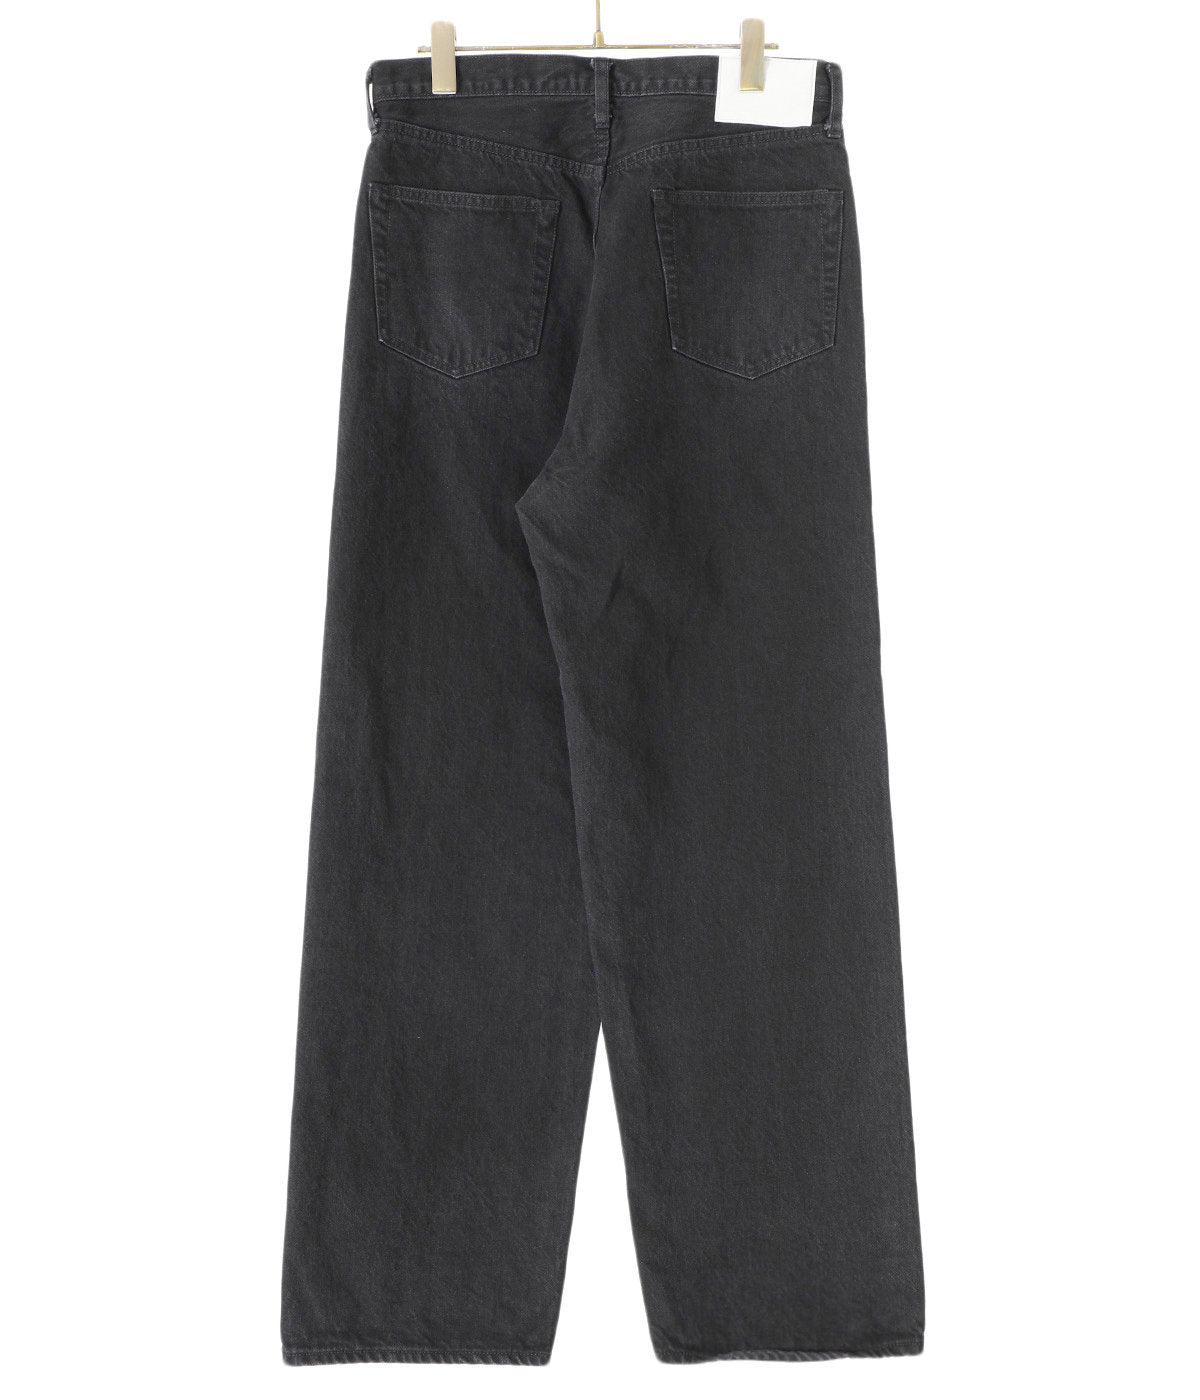 stein 5PK Vintage ReproductionDenimJeans - デニム/ジーンズ